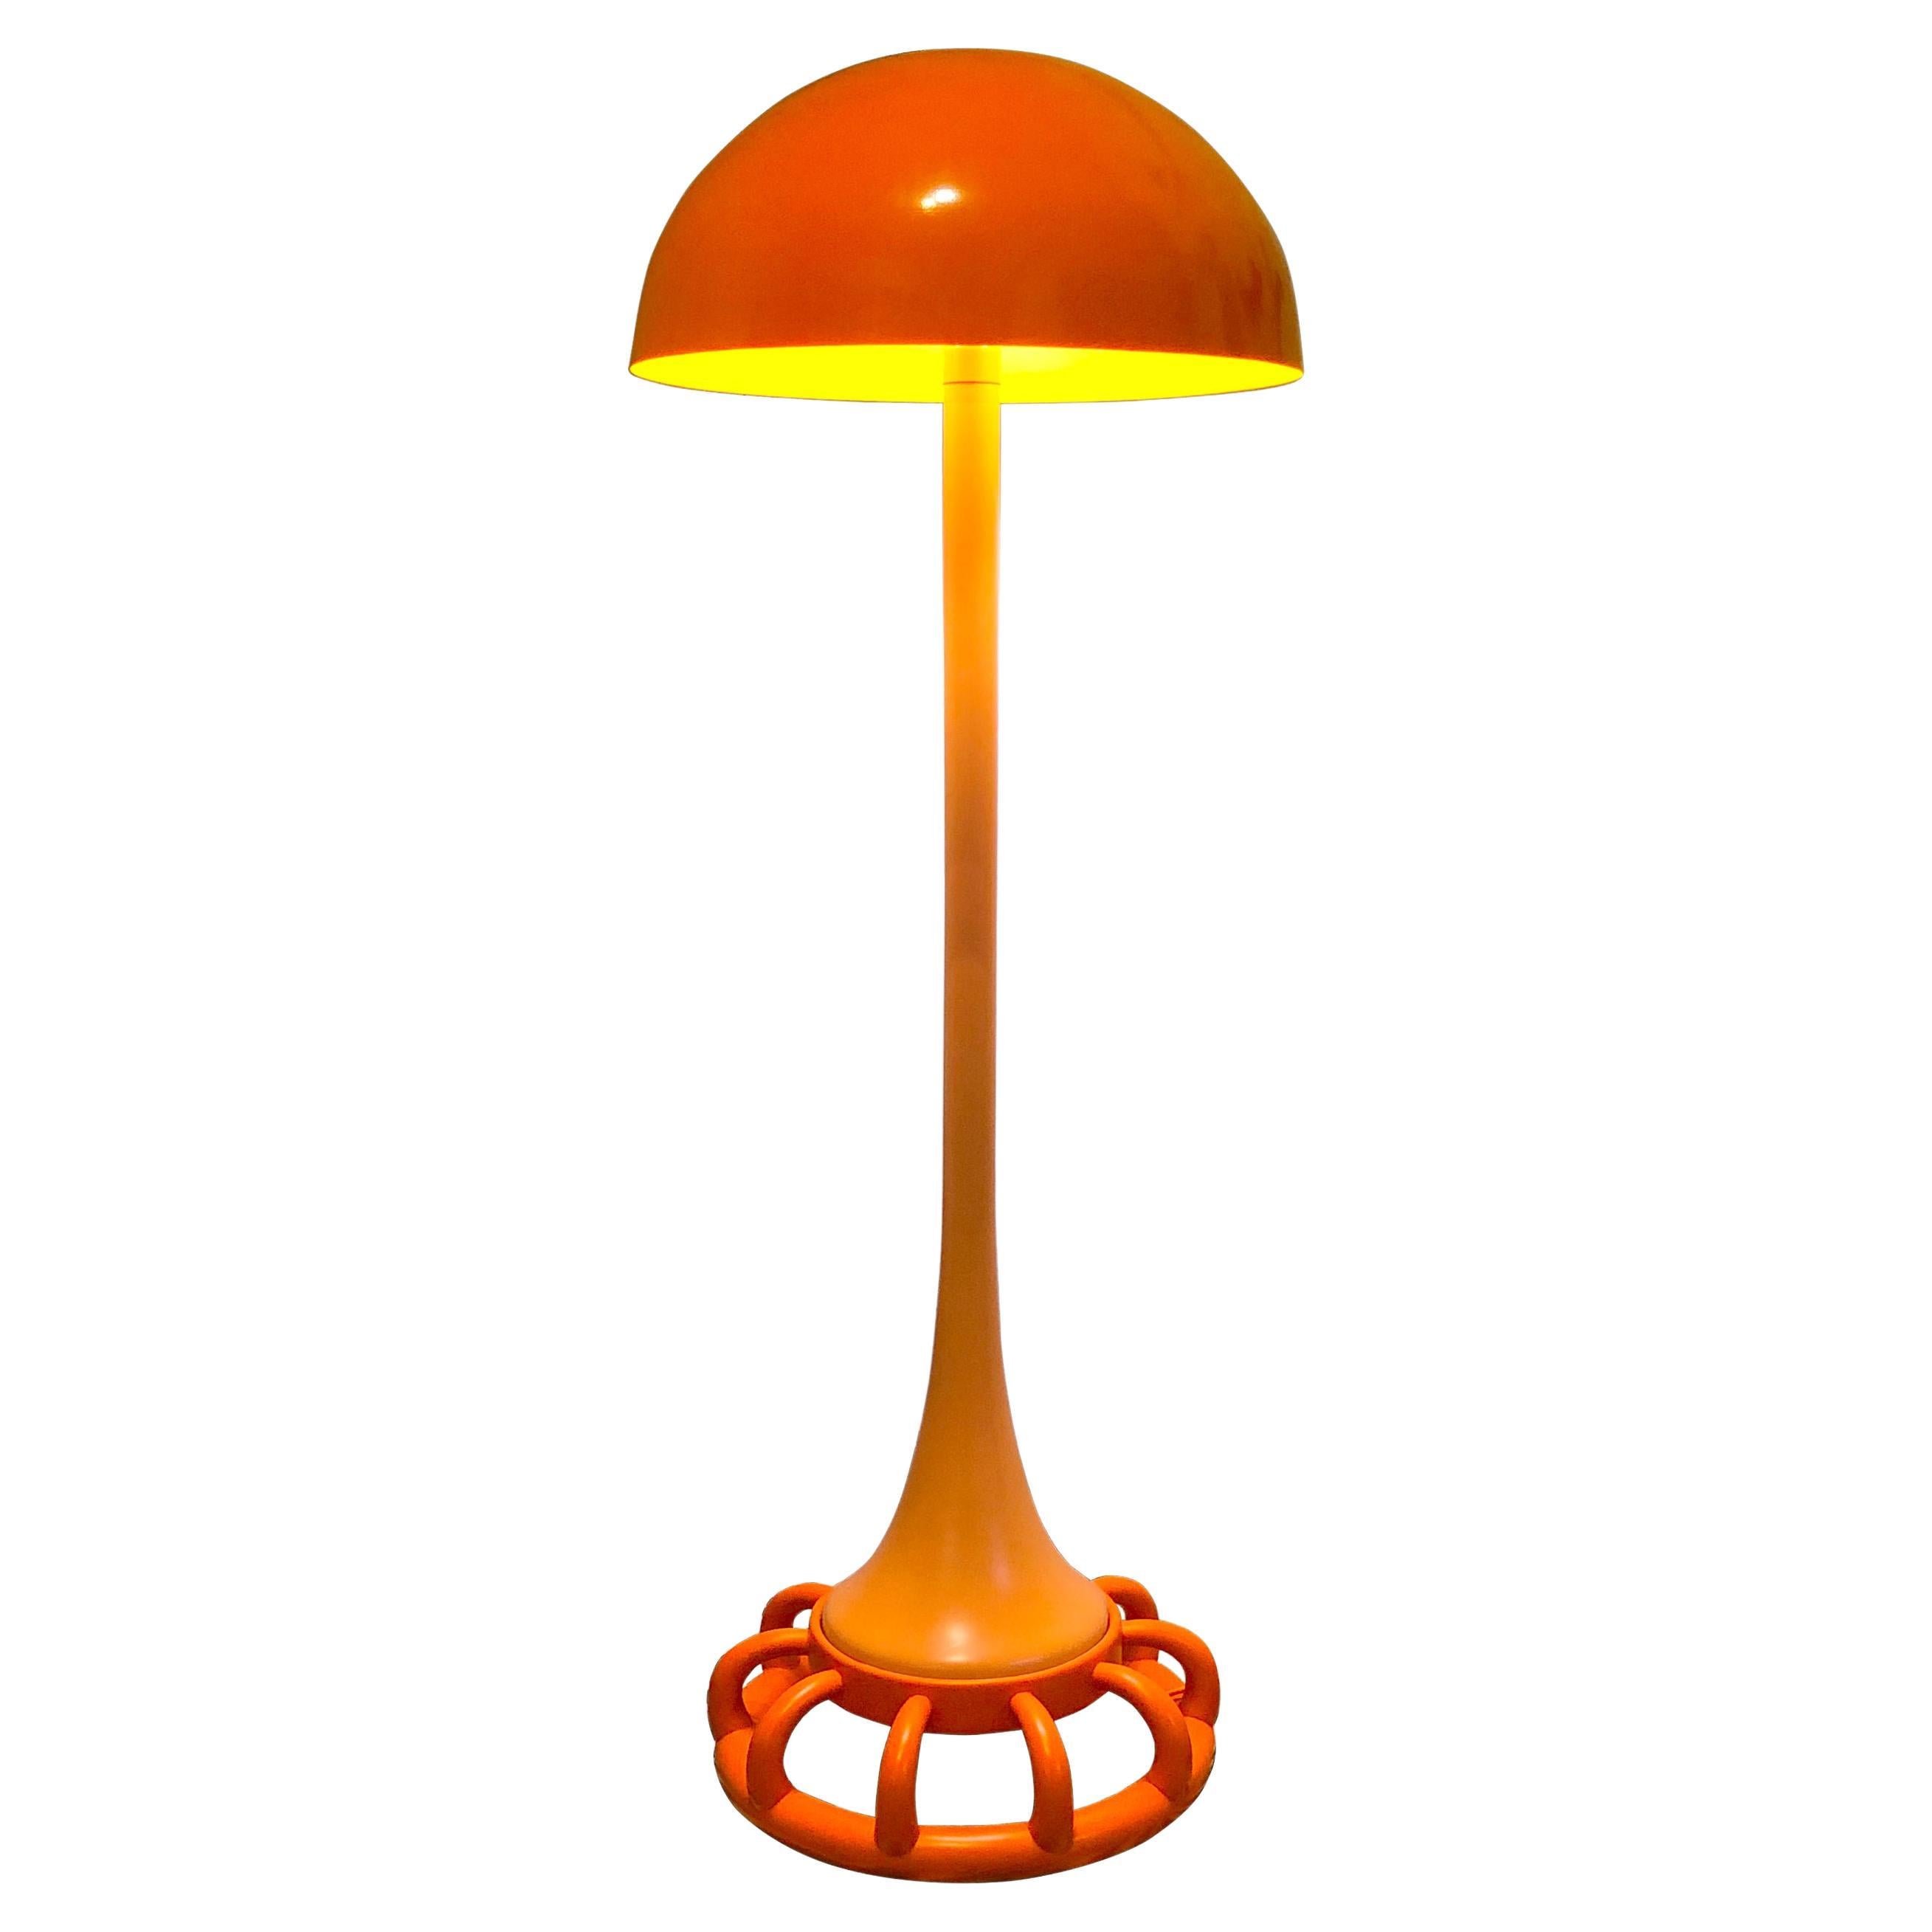 Jellyfish Floor Lamp: Vibrant Orange Artistic Illumination